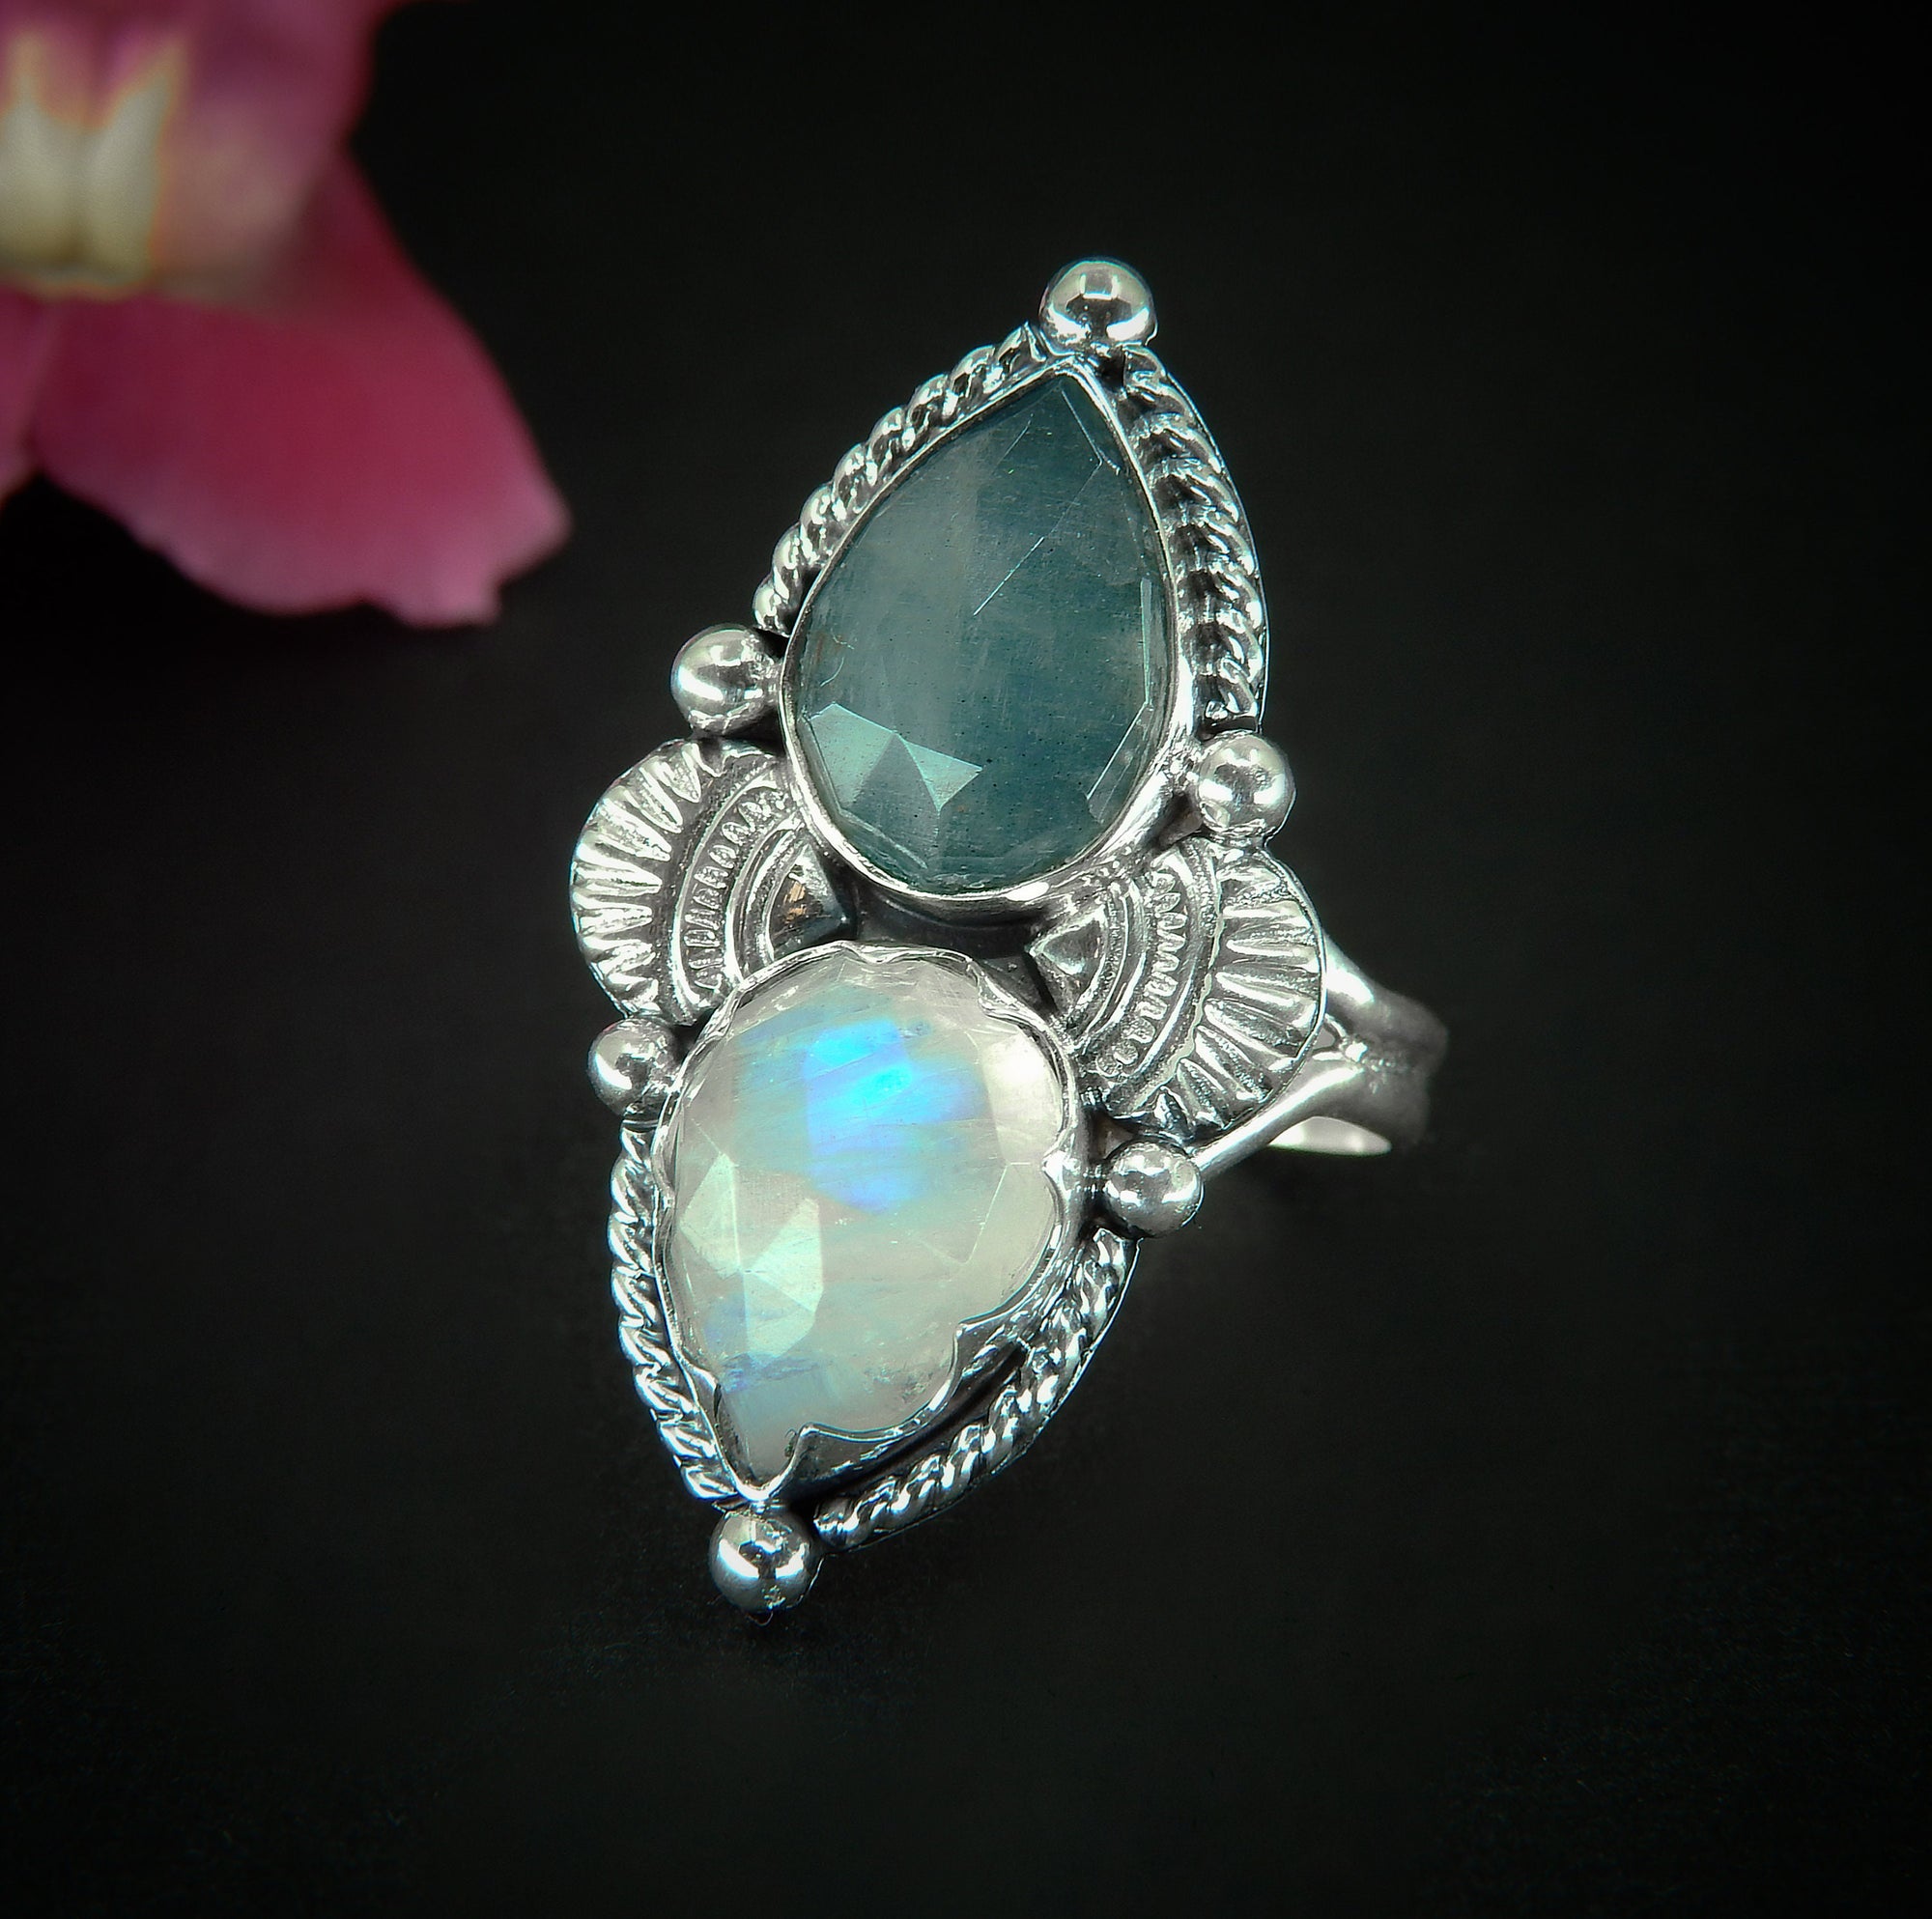 Rose Cut Aquamarine & Moonstone Ring - Size 11 - Sterling Silver - Aquamarine Ring - Rainbow Moonstone Jewelry - OOAK Ocean Shell Ring